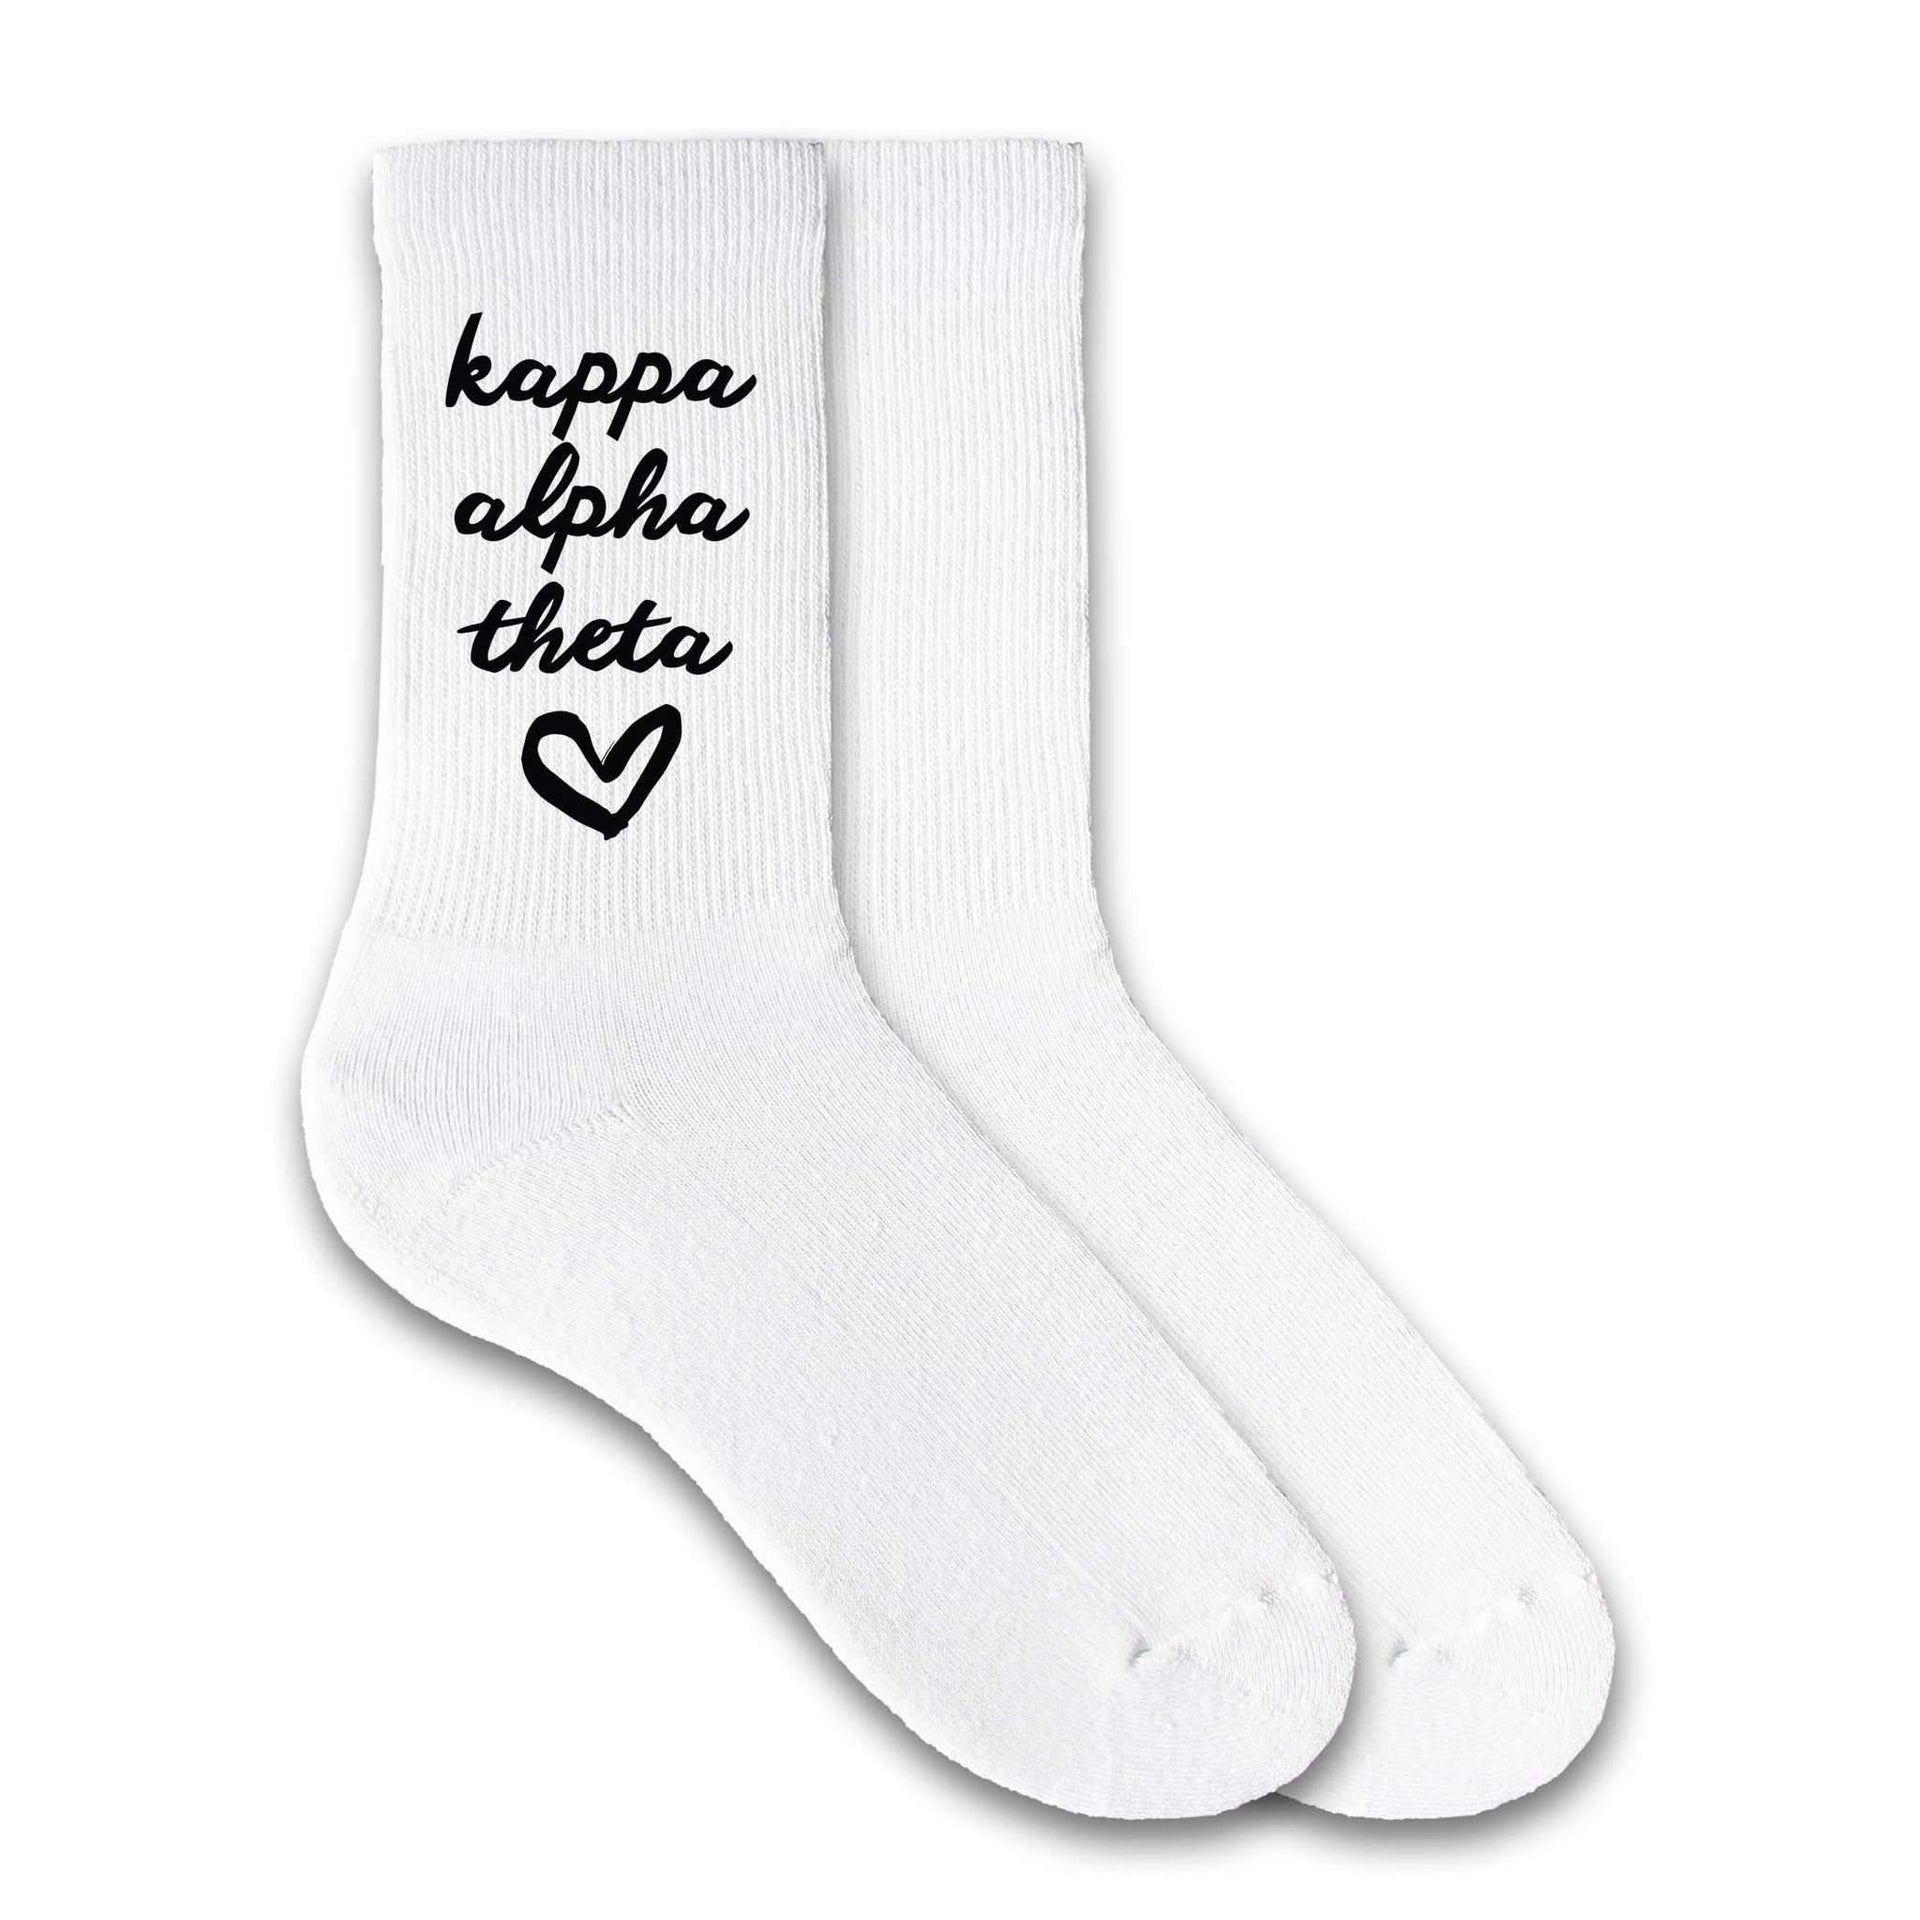 Kappa Alpha Theta sorority name and heart design custom printed on white cotton crew socks